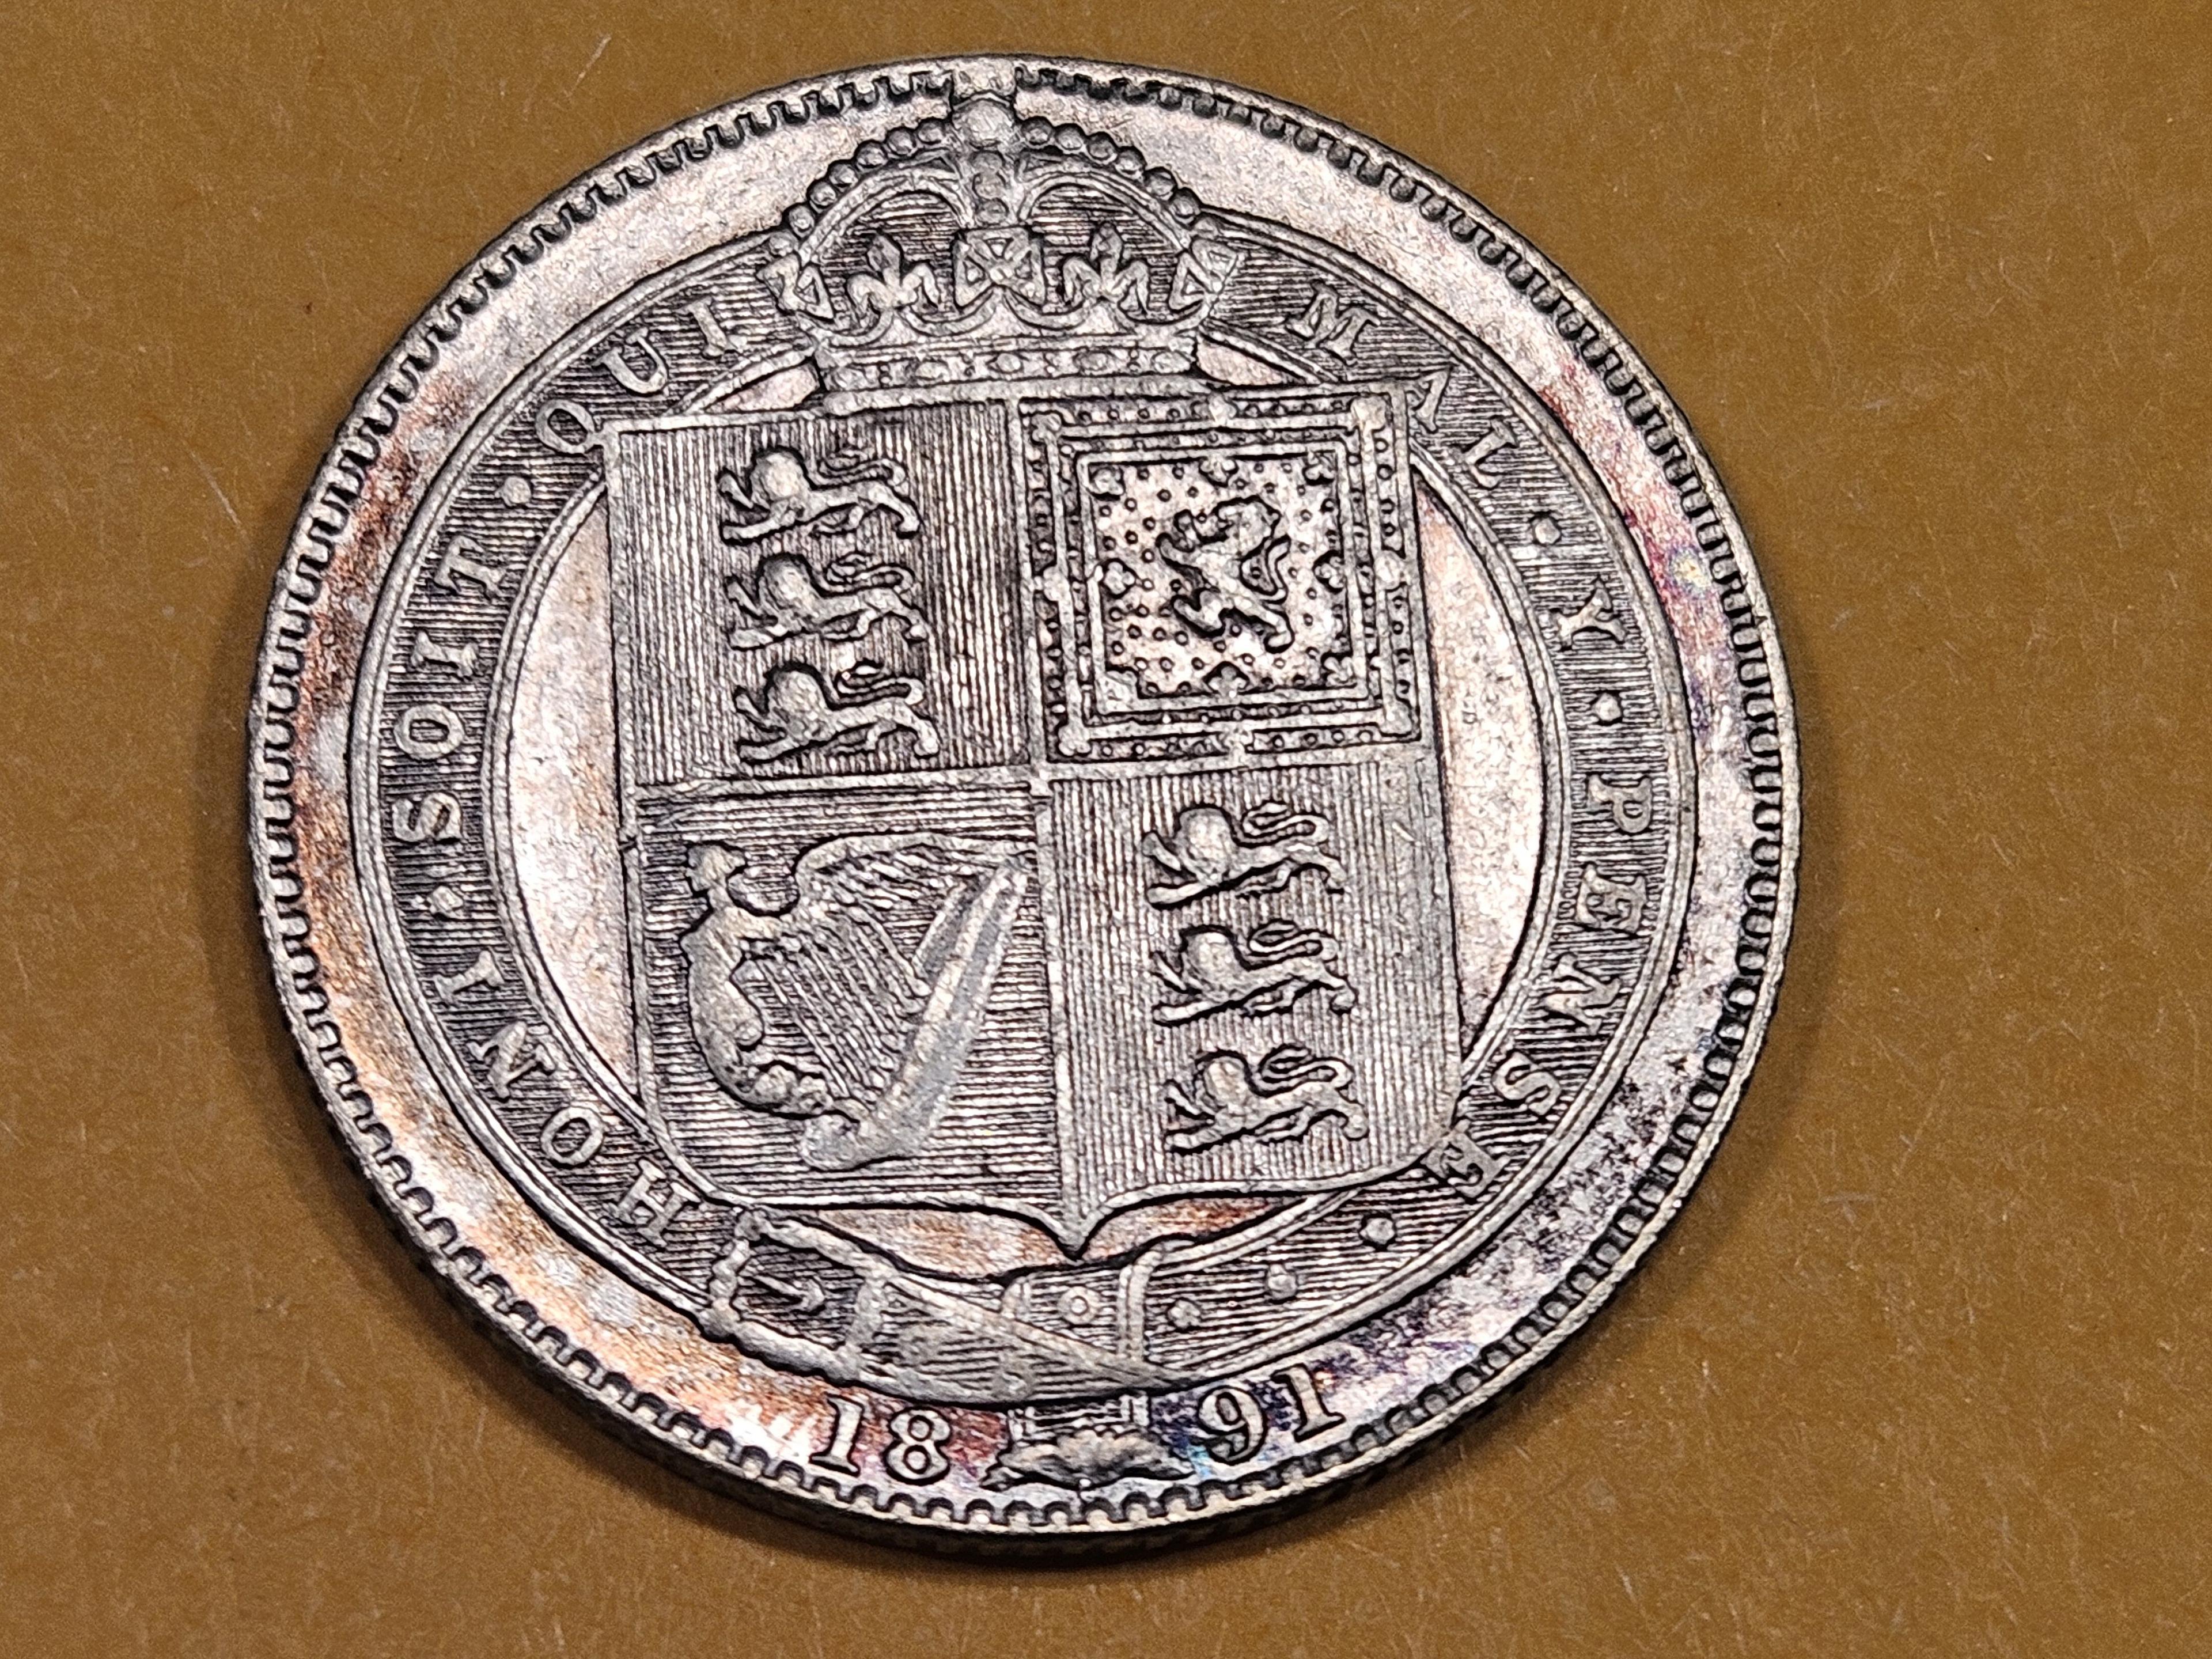 Very nice 1891 England silver shilling